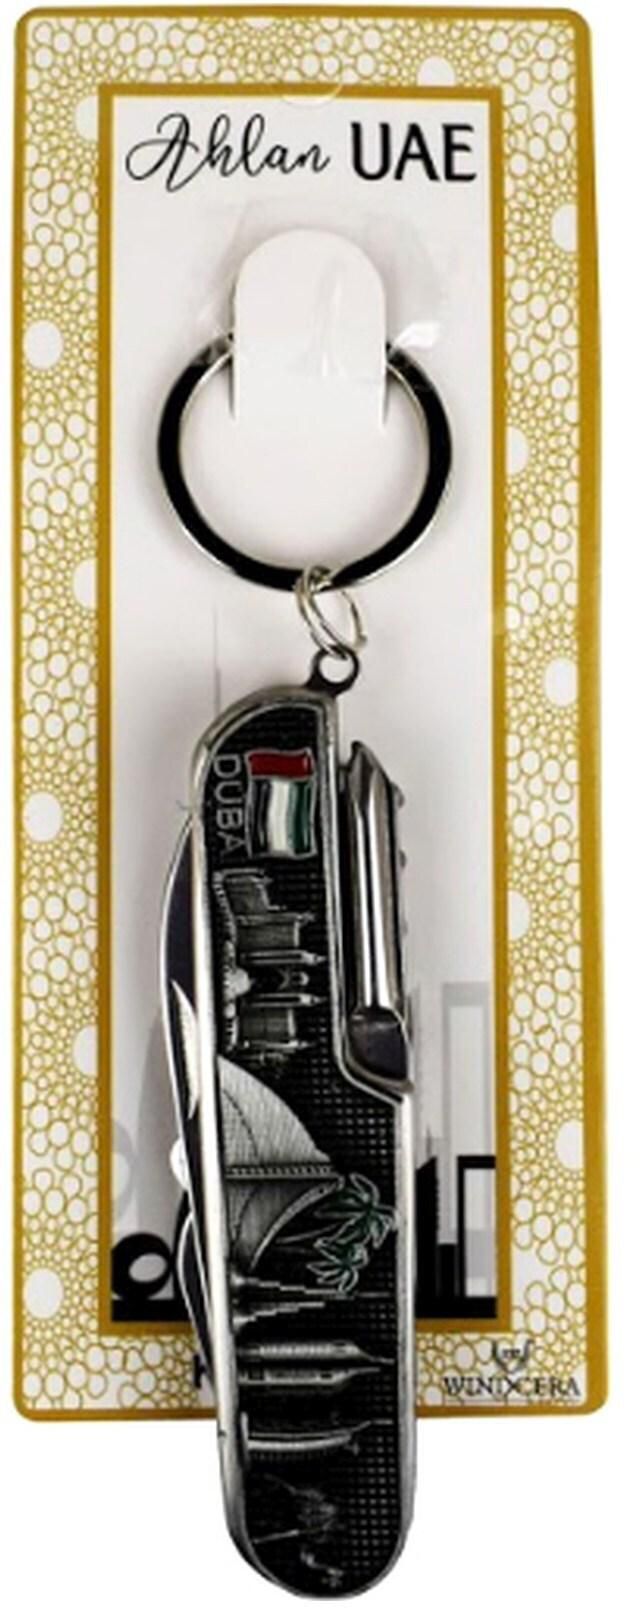 Ahlan UAE Dubai Themed Keychain Black